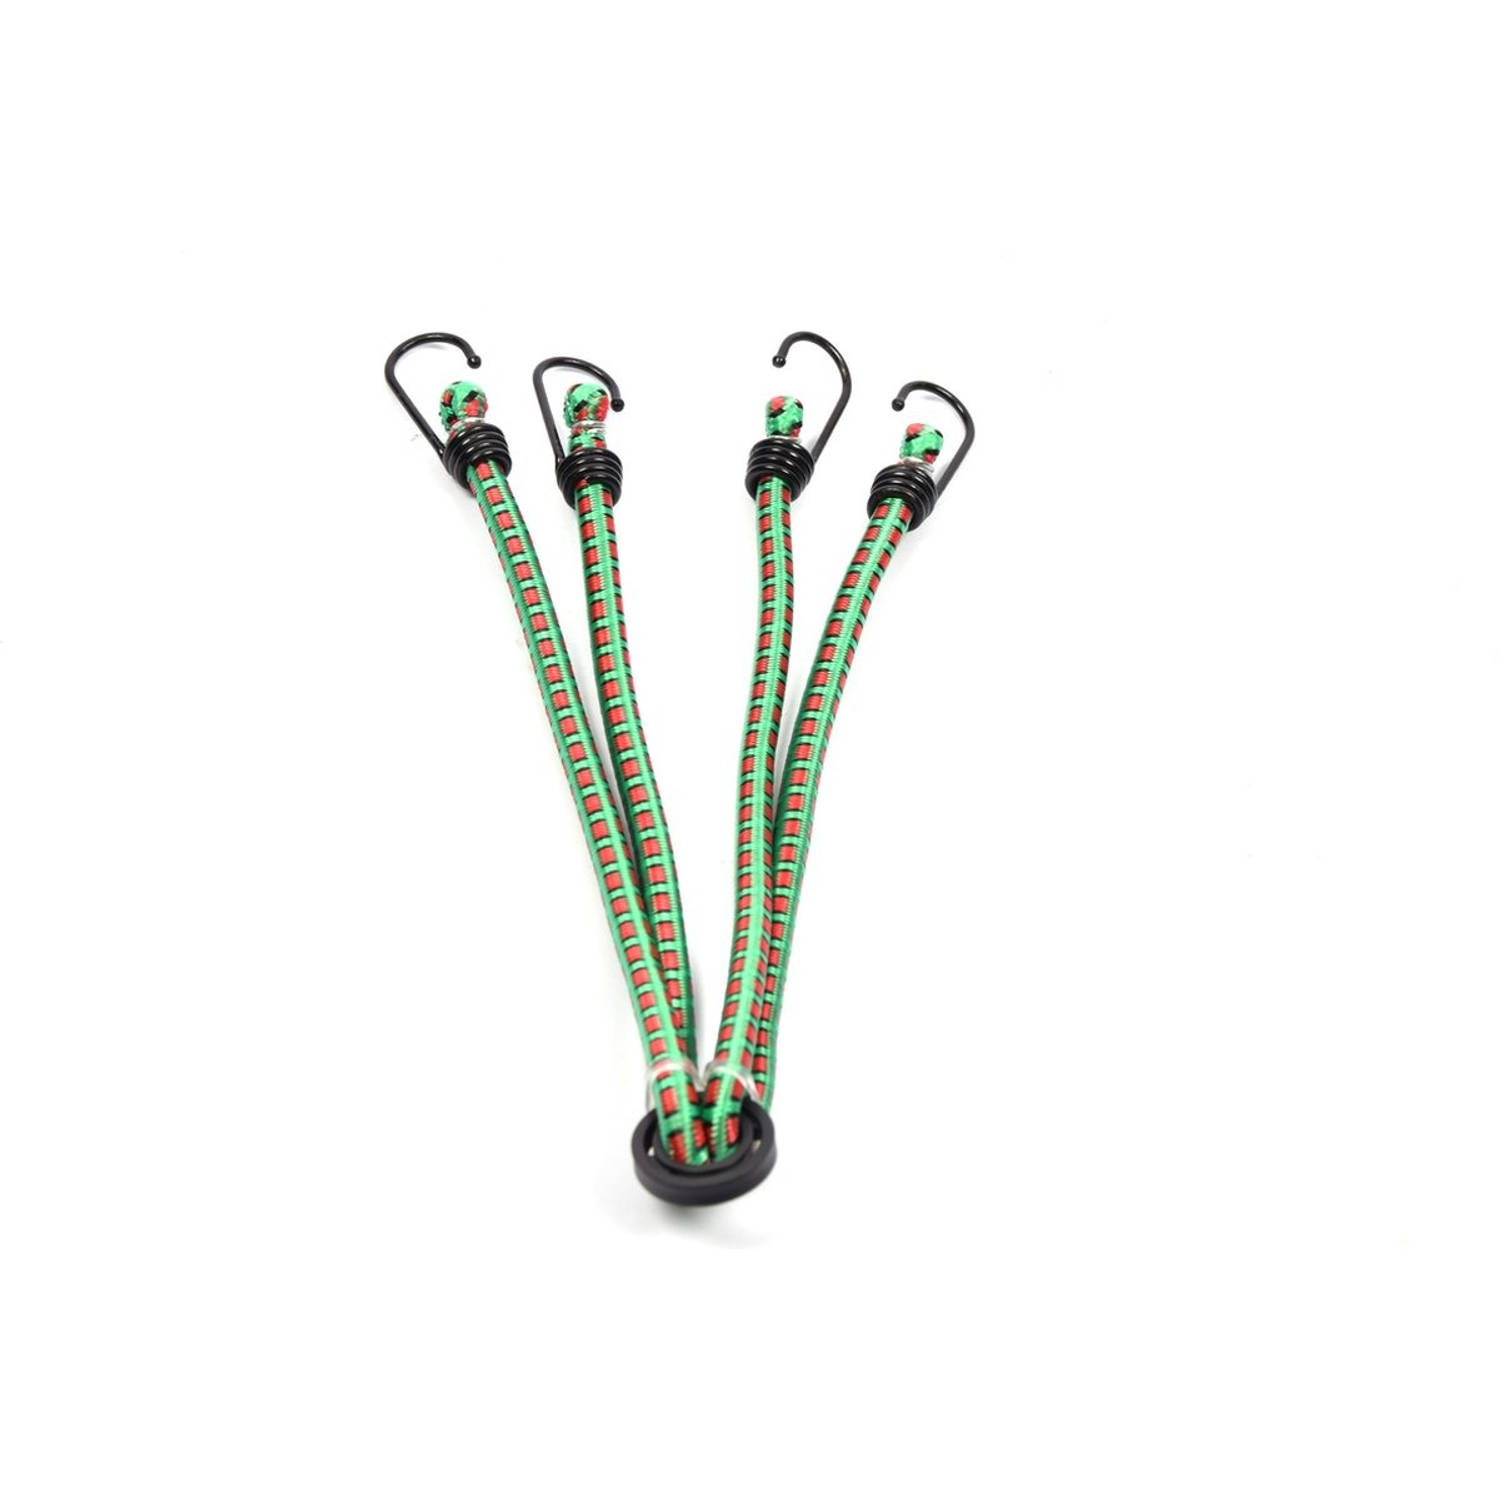 Snelbinders - Bagagespin 4 haken - spinbinder 60 cm met vier elastische armen -spinbinder 45 cm met vier elastische